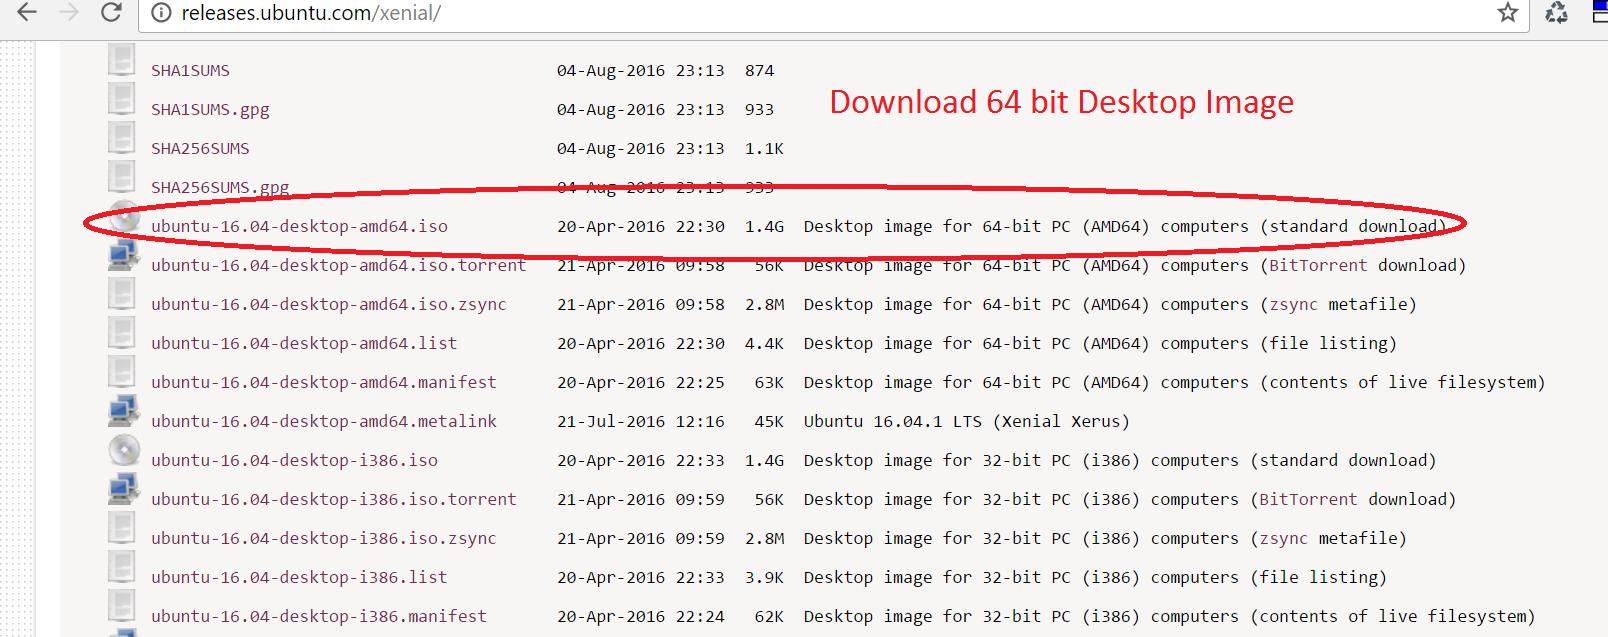 download ubuntu 14.04 iso 64 bit free